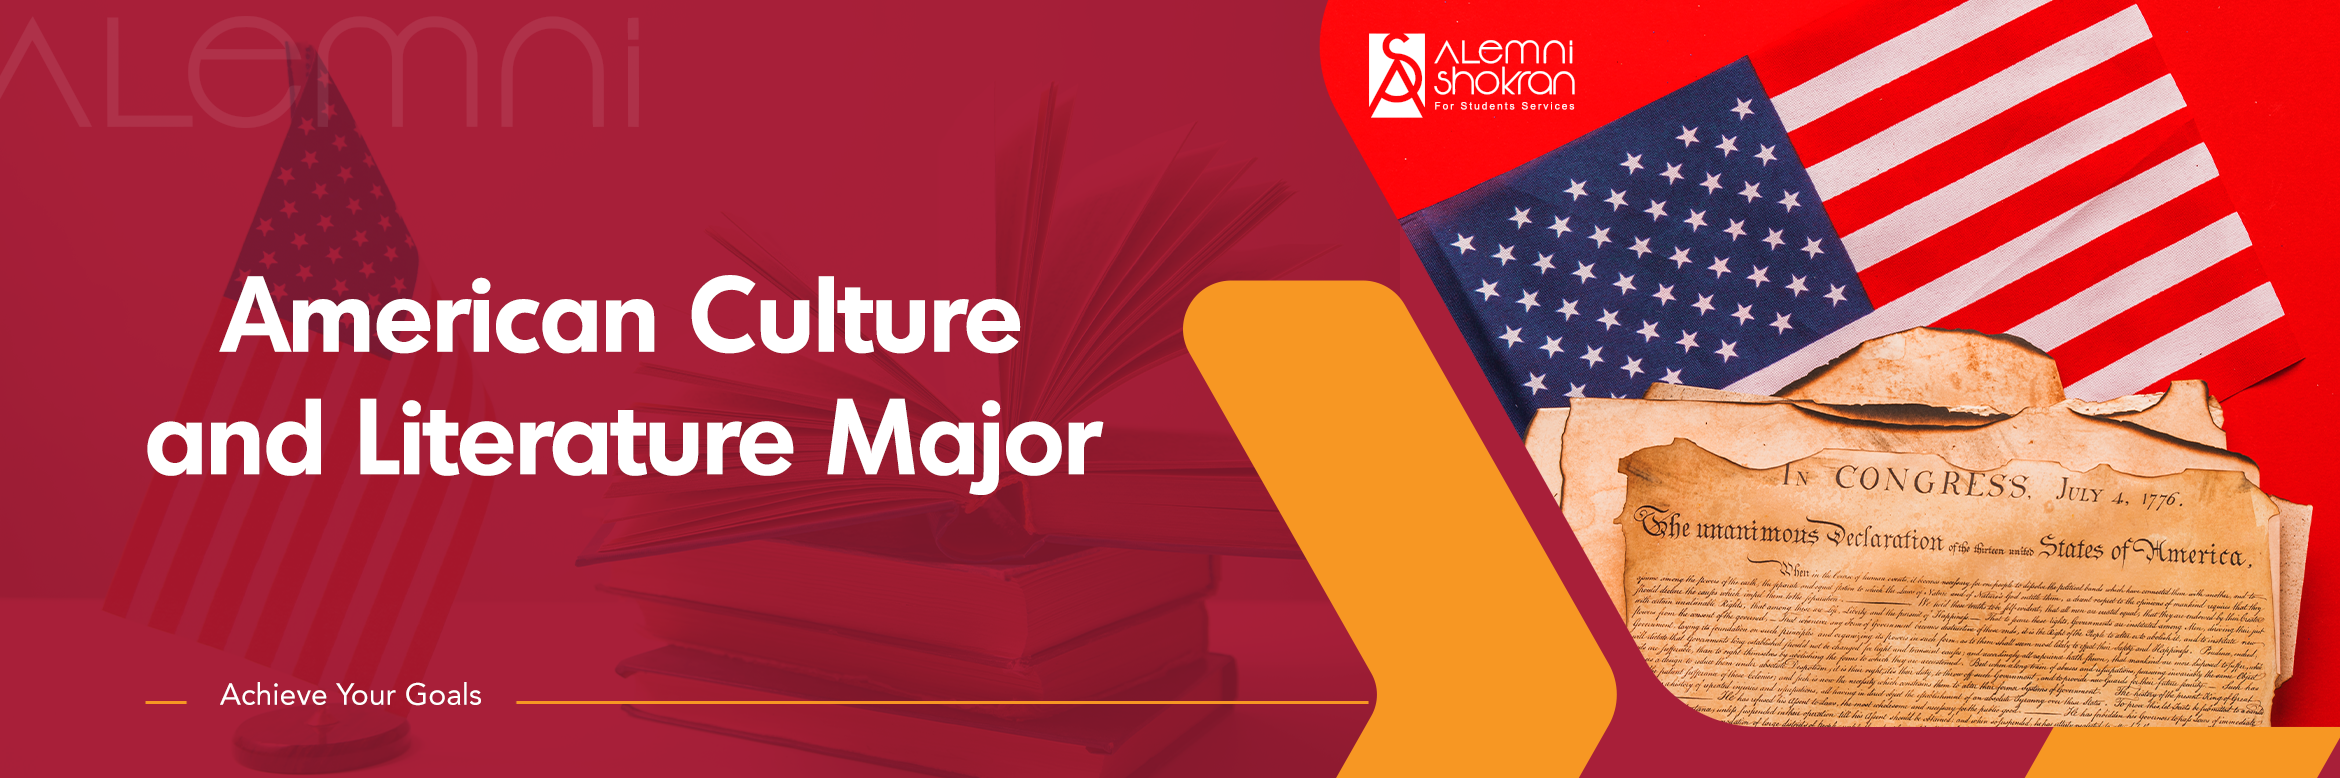 American-Culture-and-Literature-Major